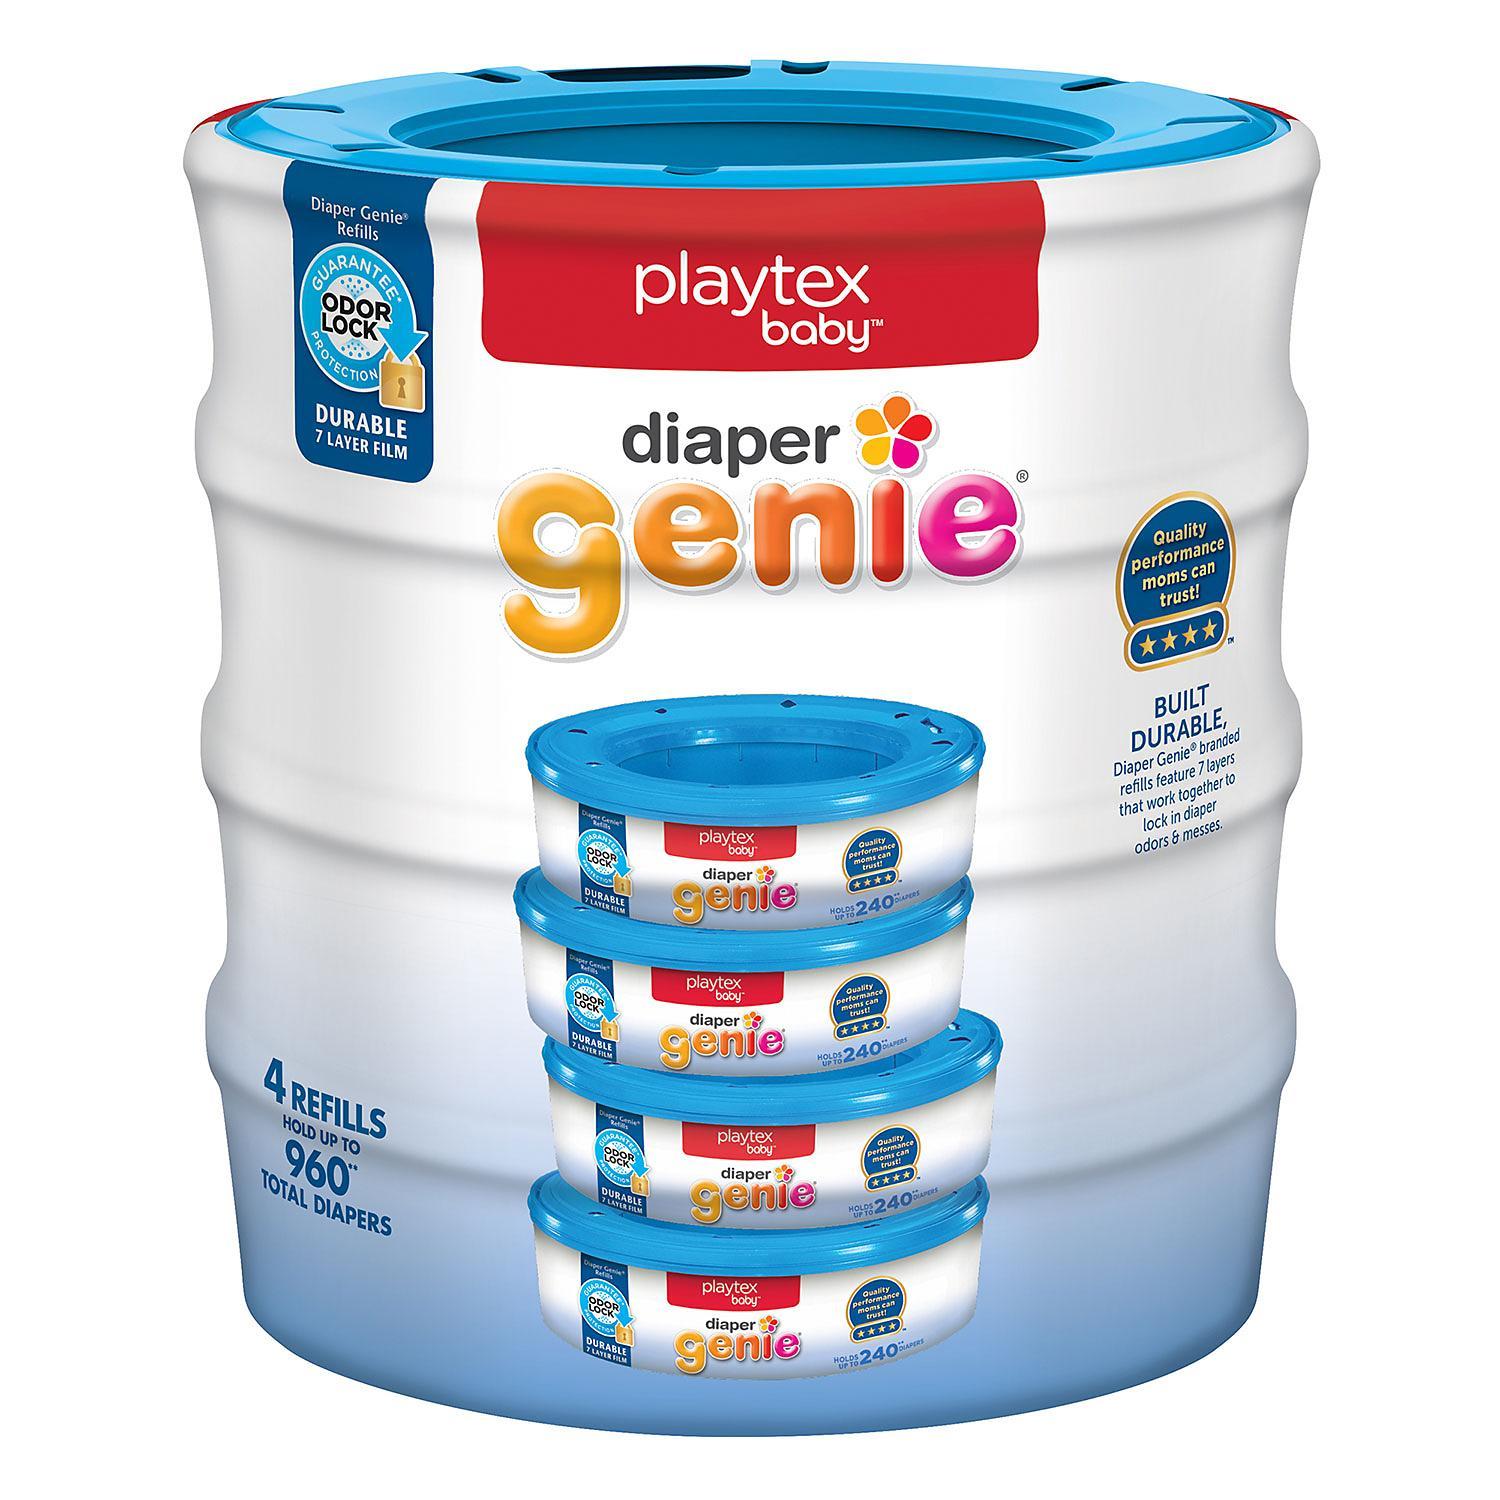 Playtex Diaper Genie Value Size Refill, 960 Ct Multicolor Unisex - image 1 of 8